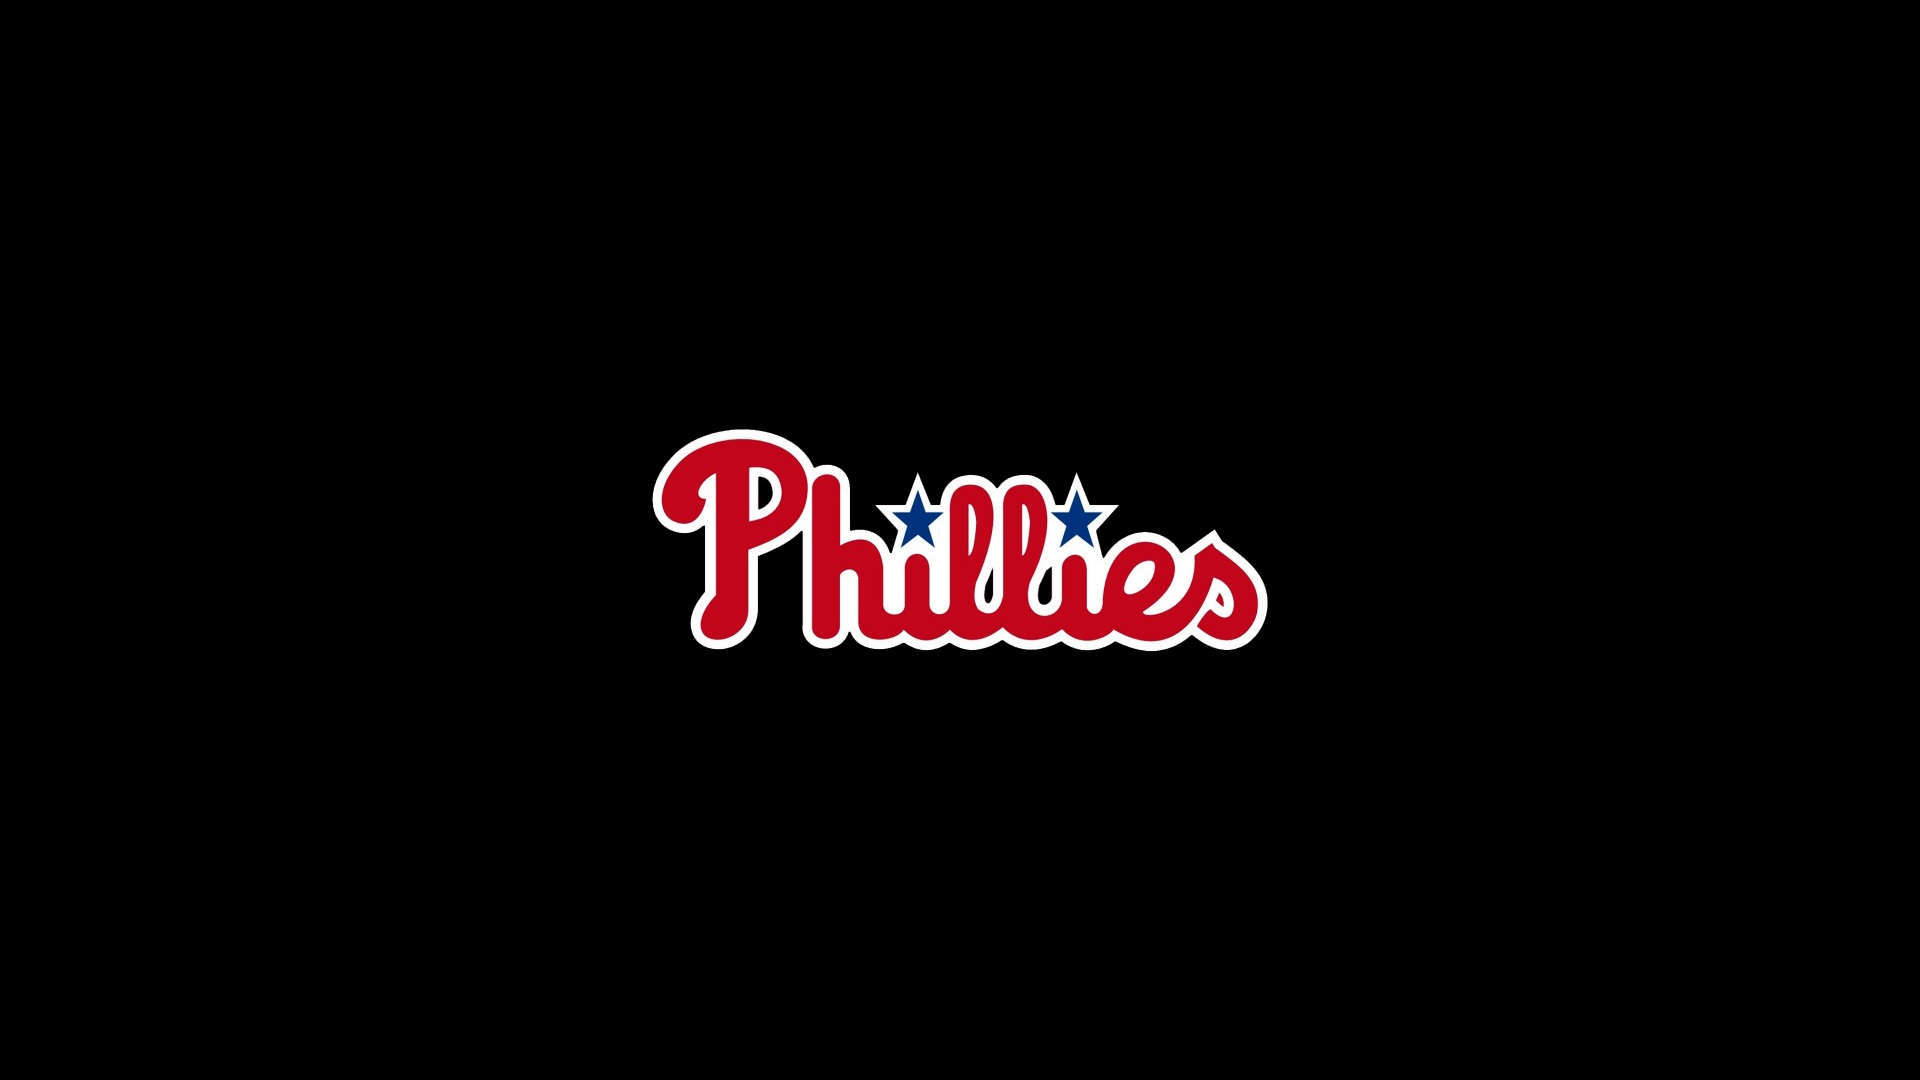 Philadelphia Phillies Wallpaper